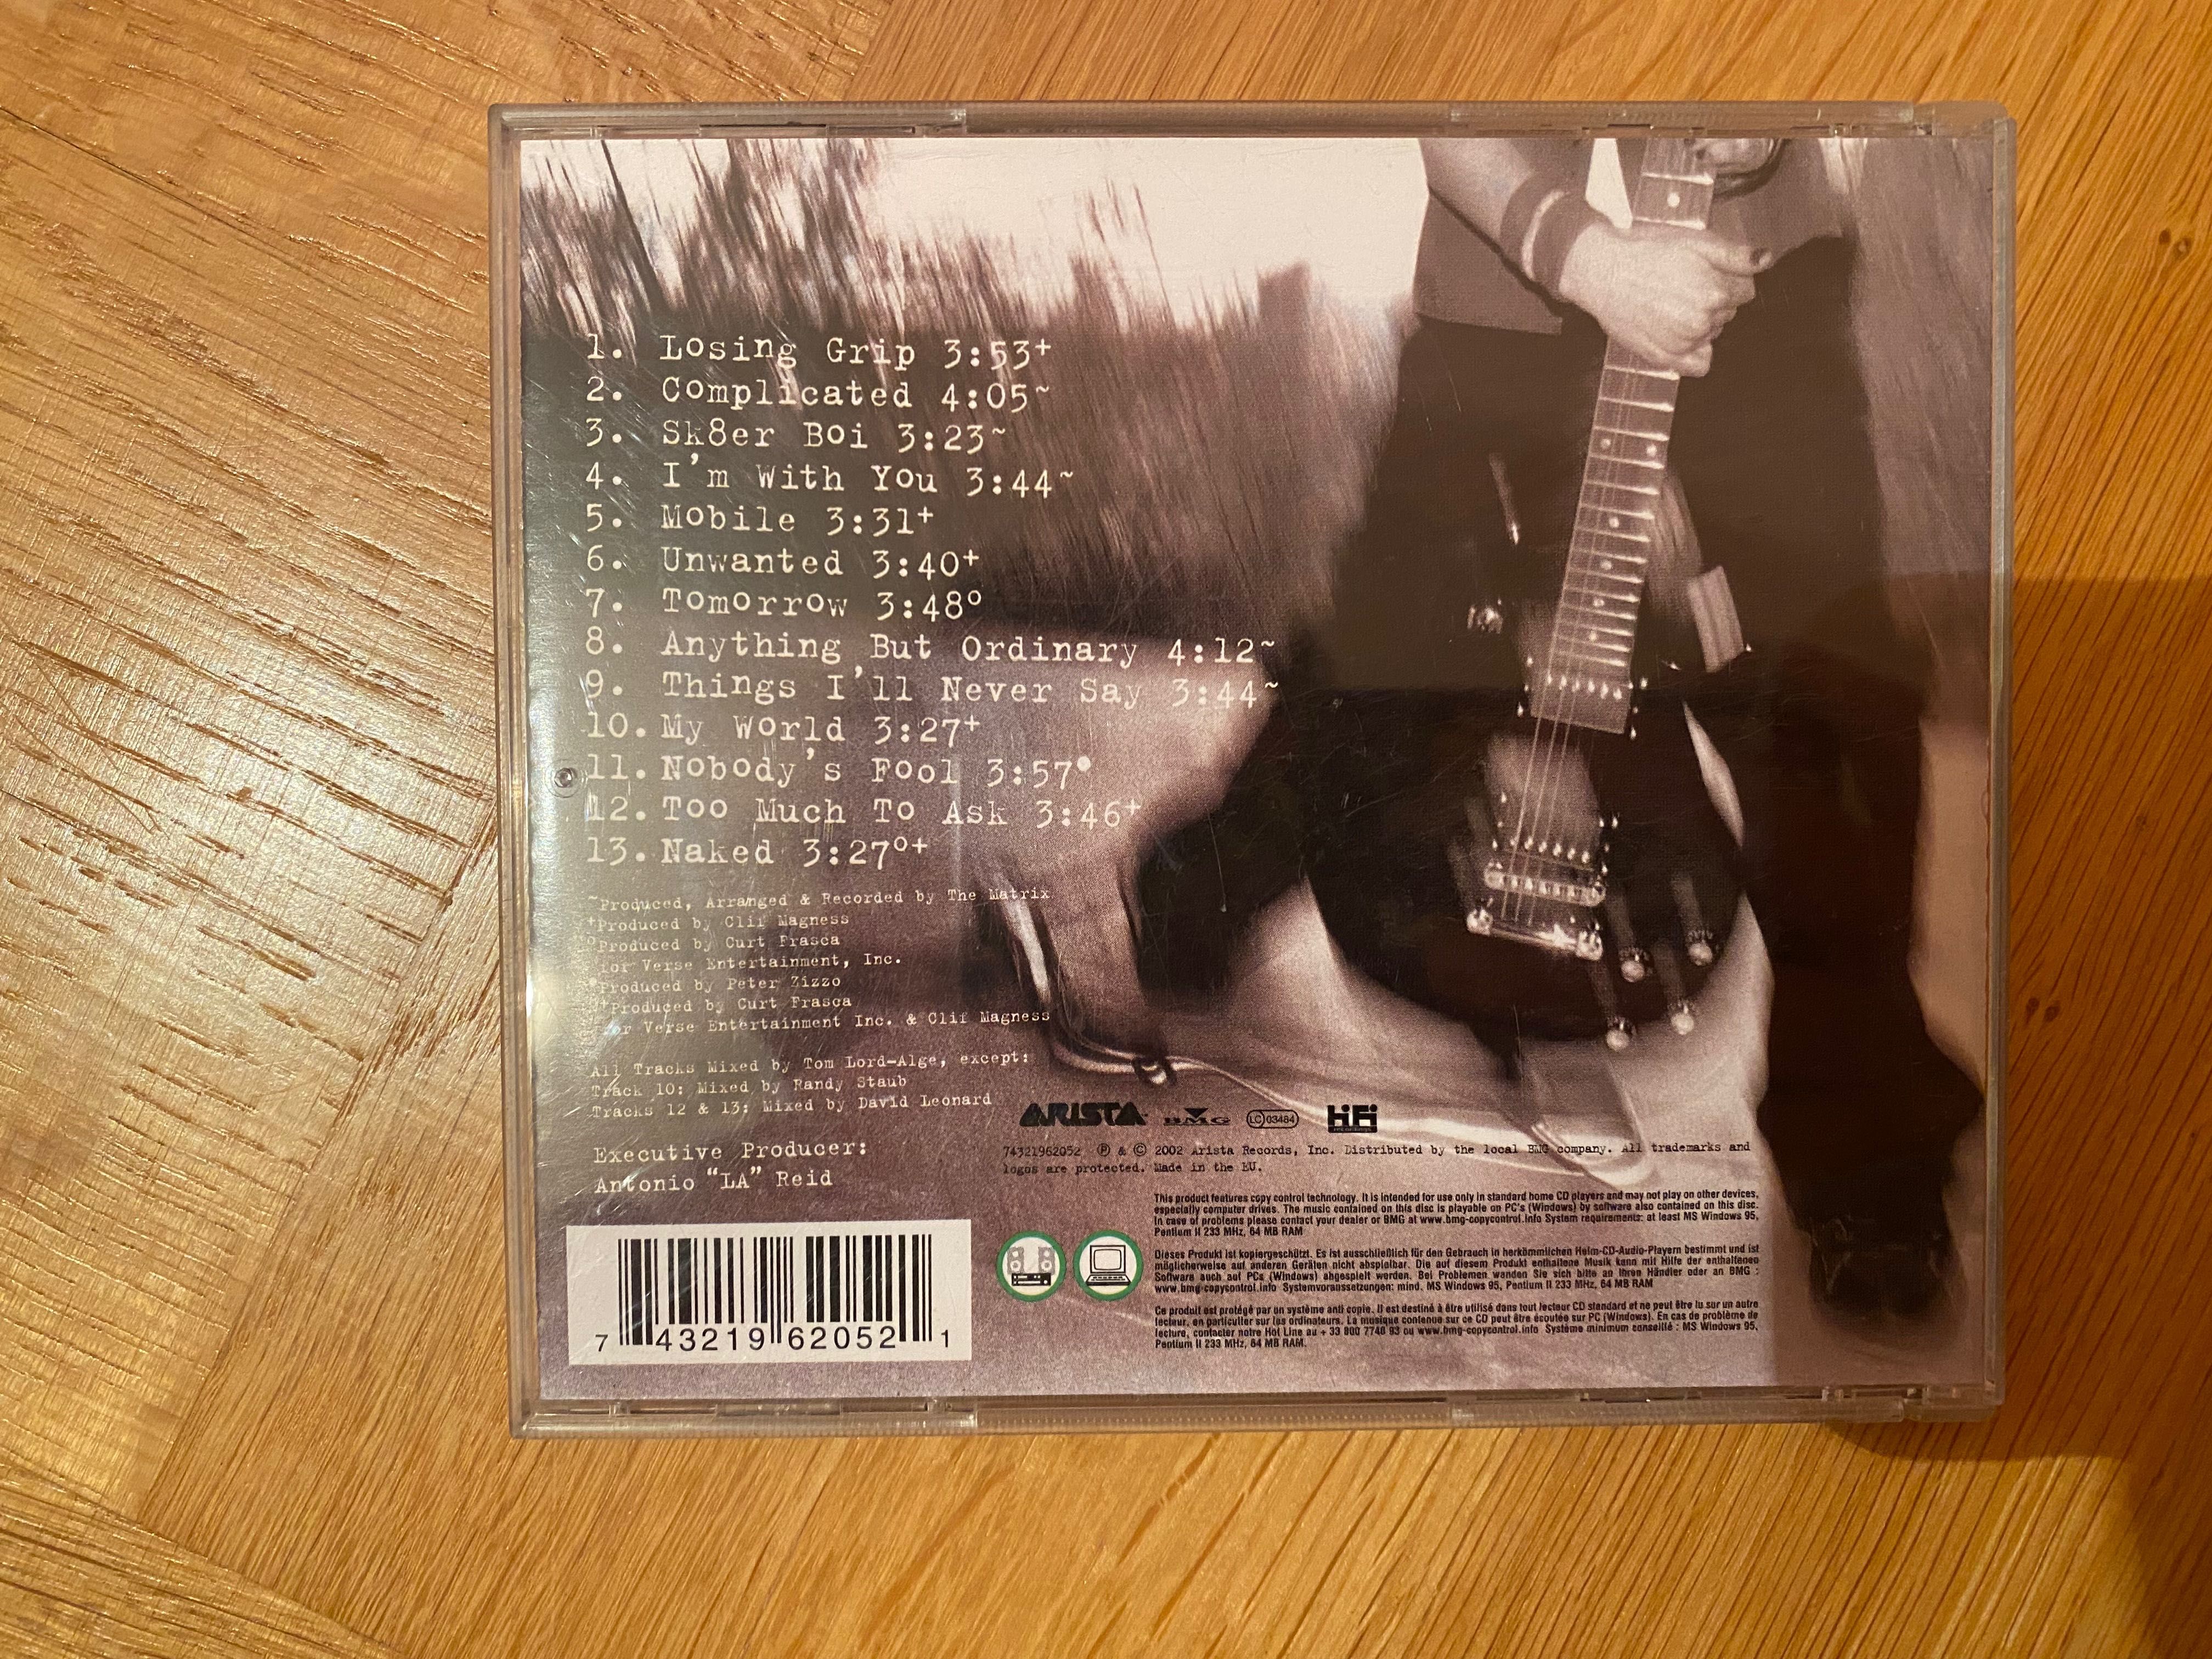 Płyta Avril Lavigne Let Go 2002